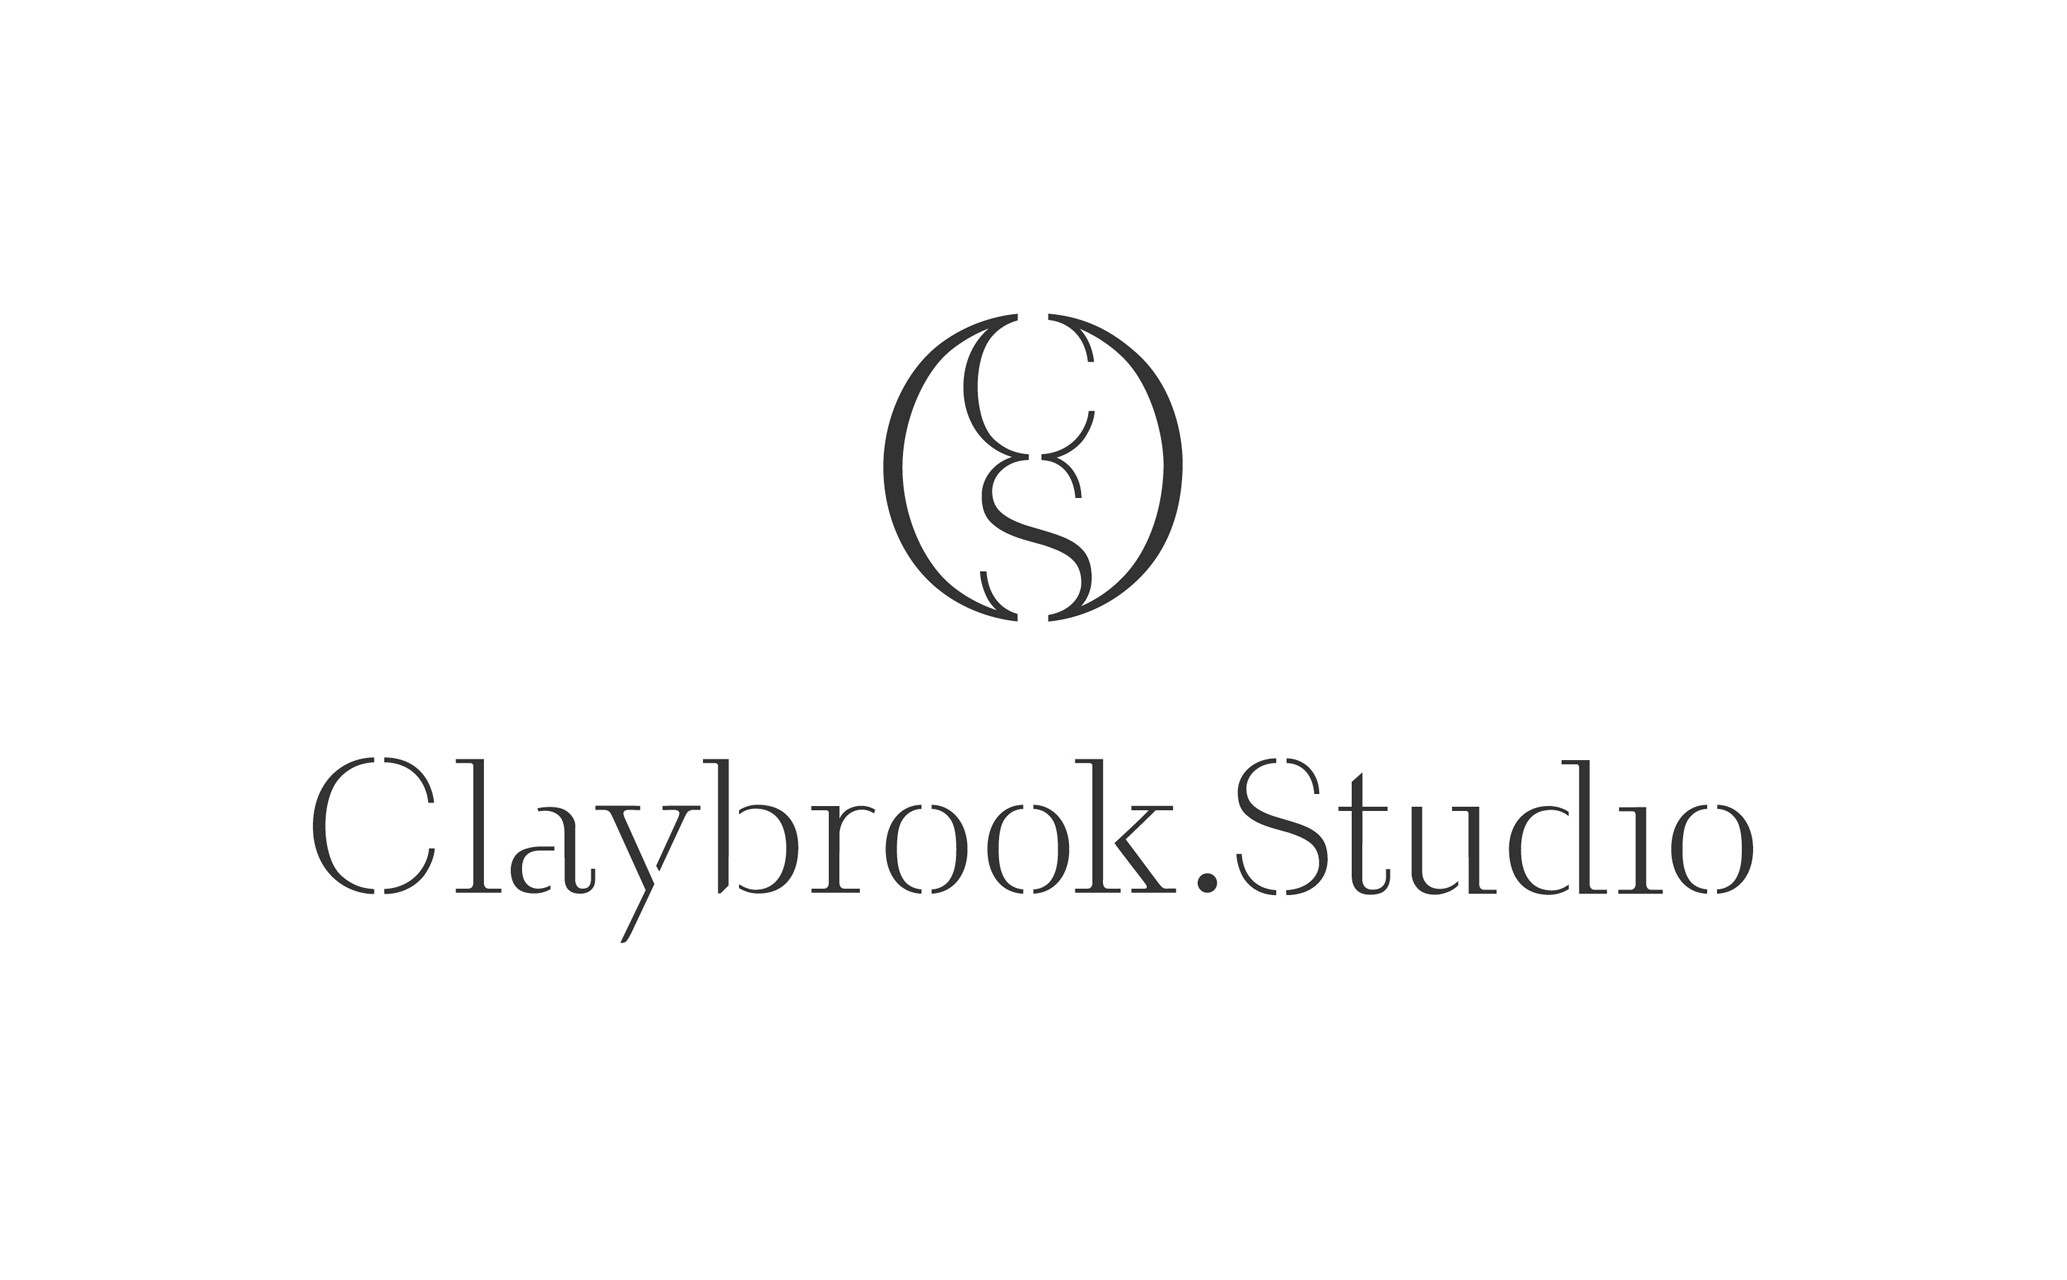 Claybrook